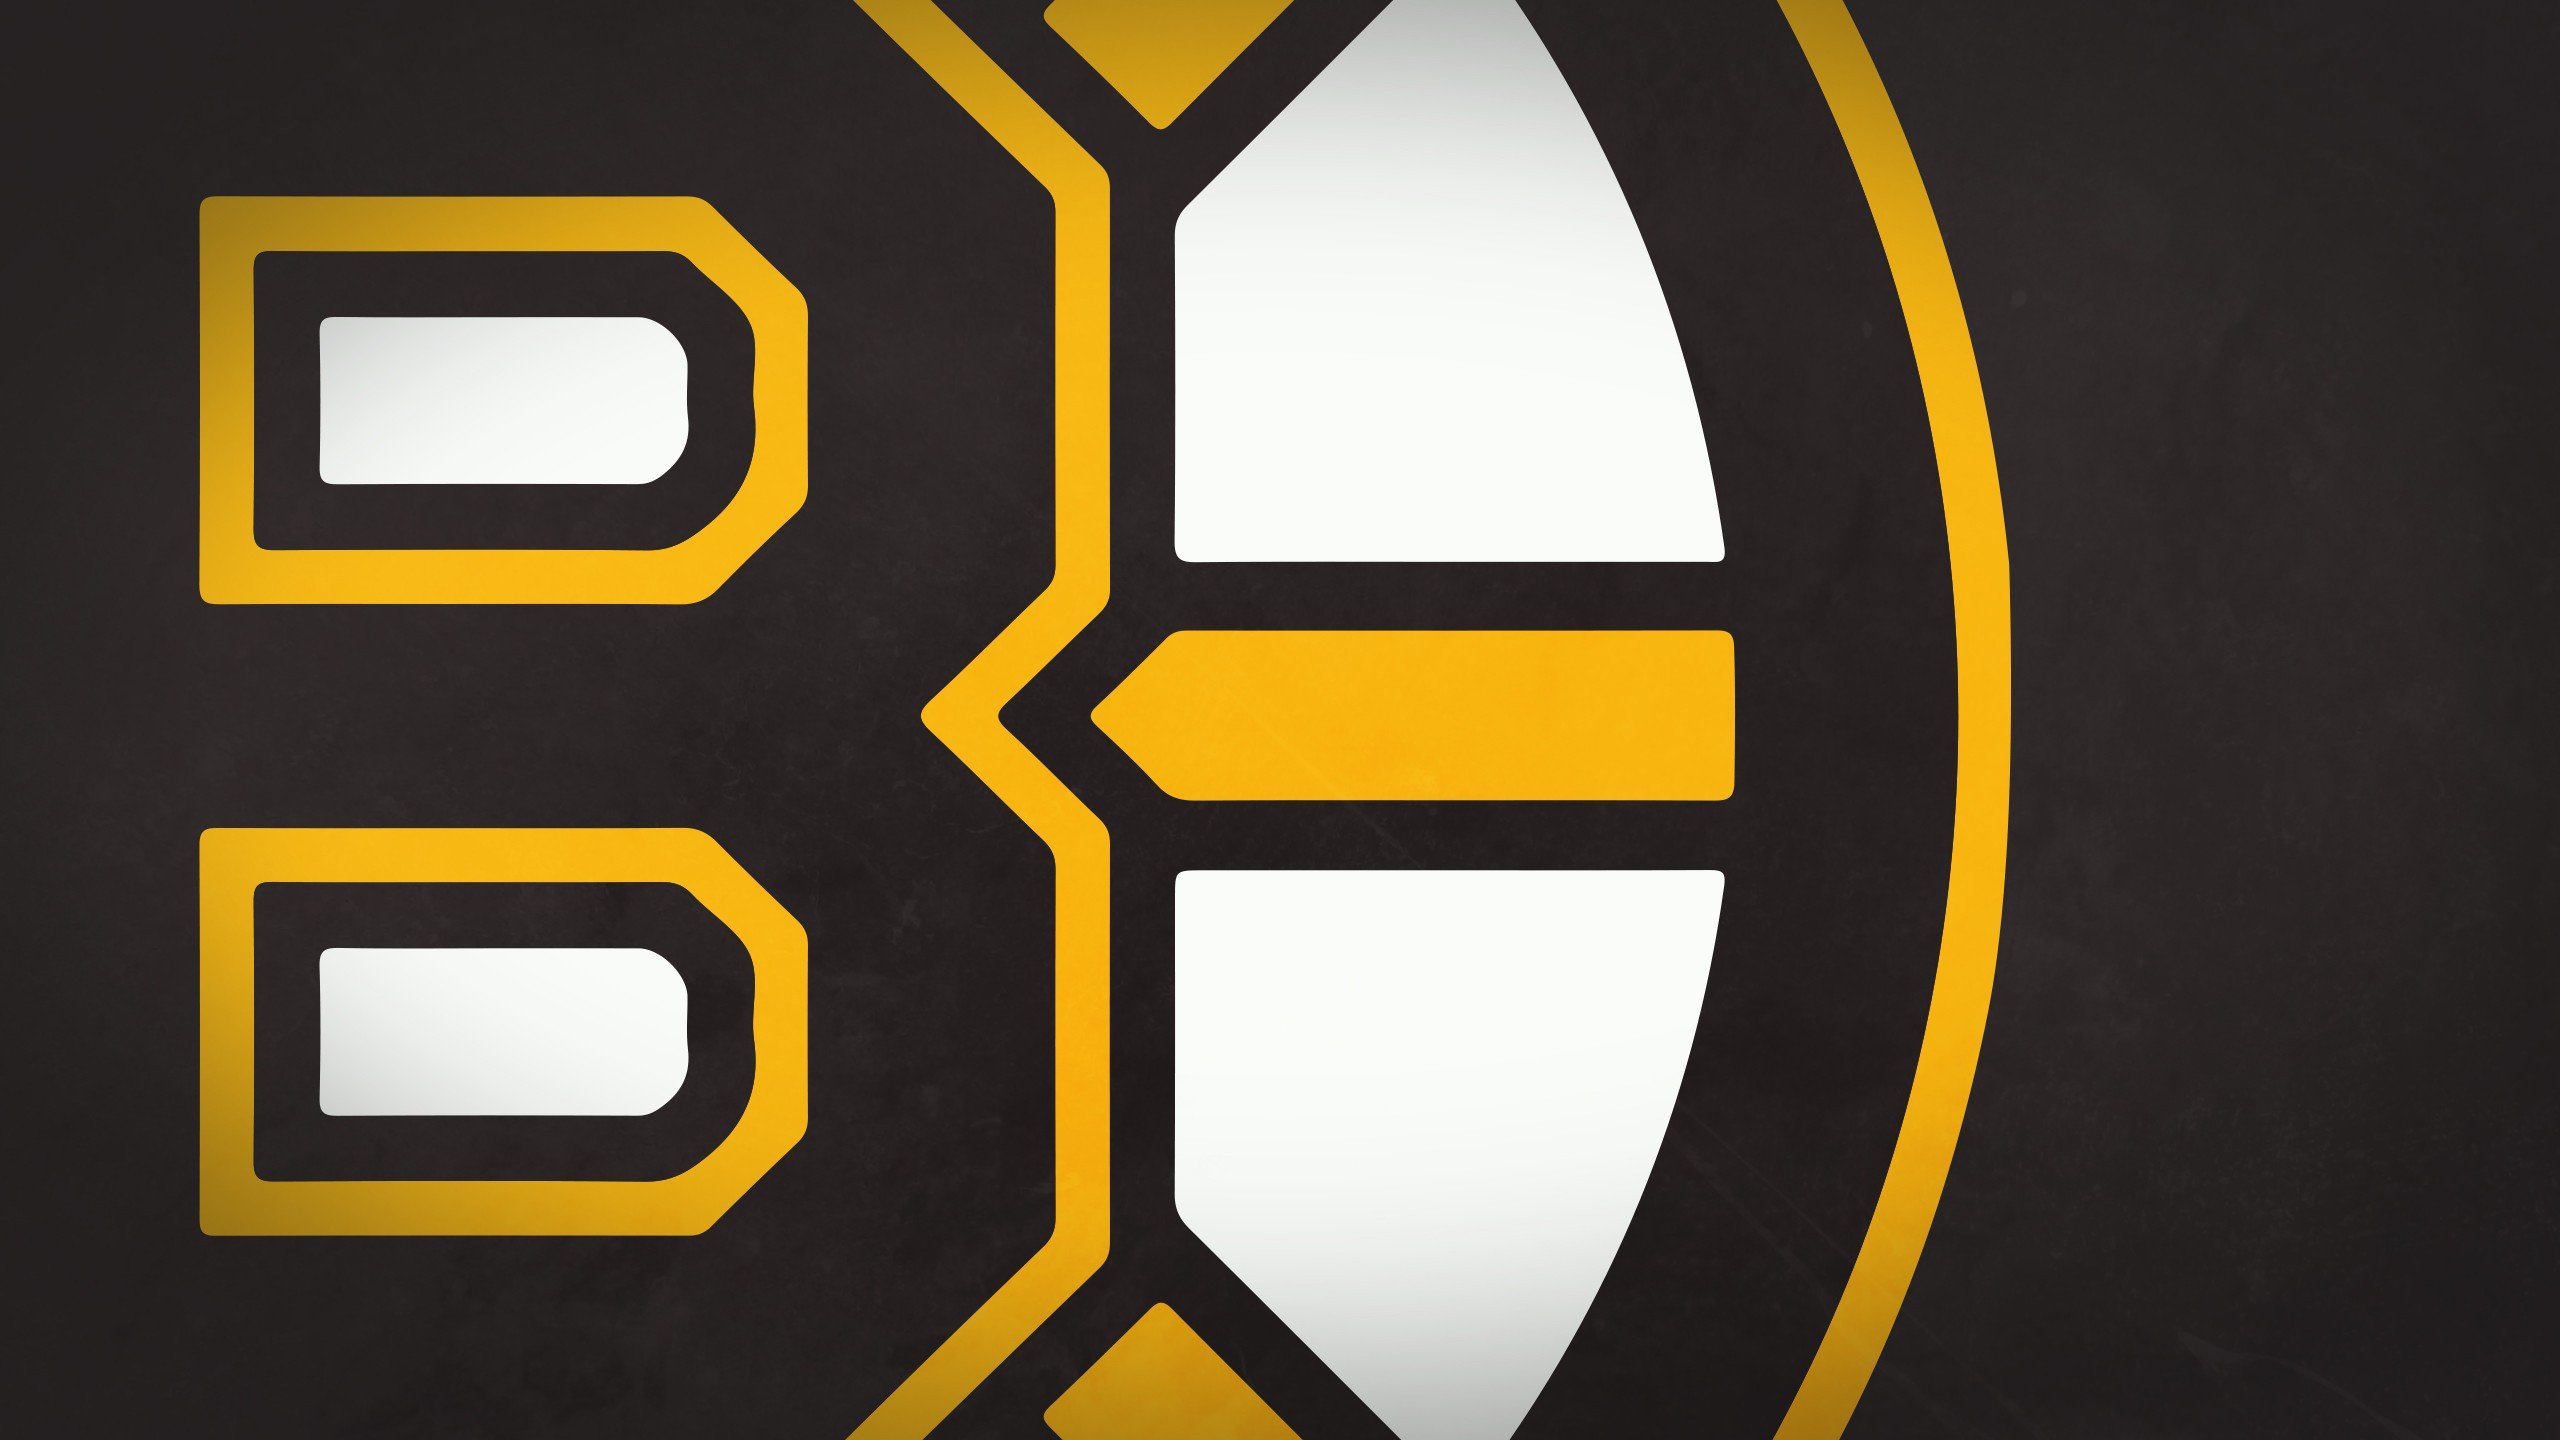 Boston Bruins Nhl Hockey Wallpaper Background